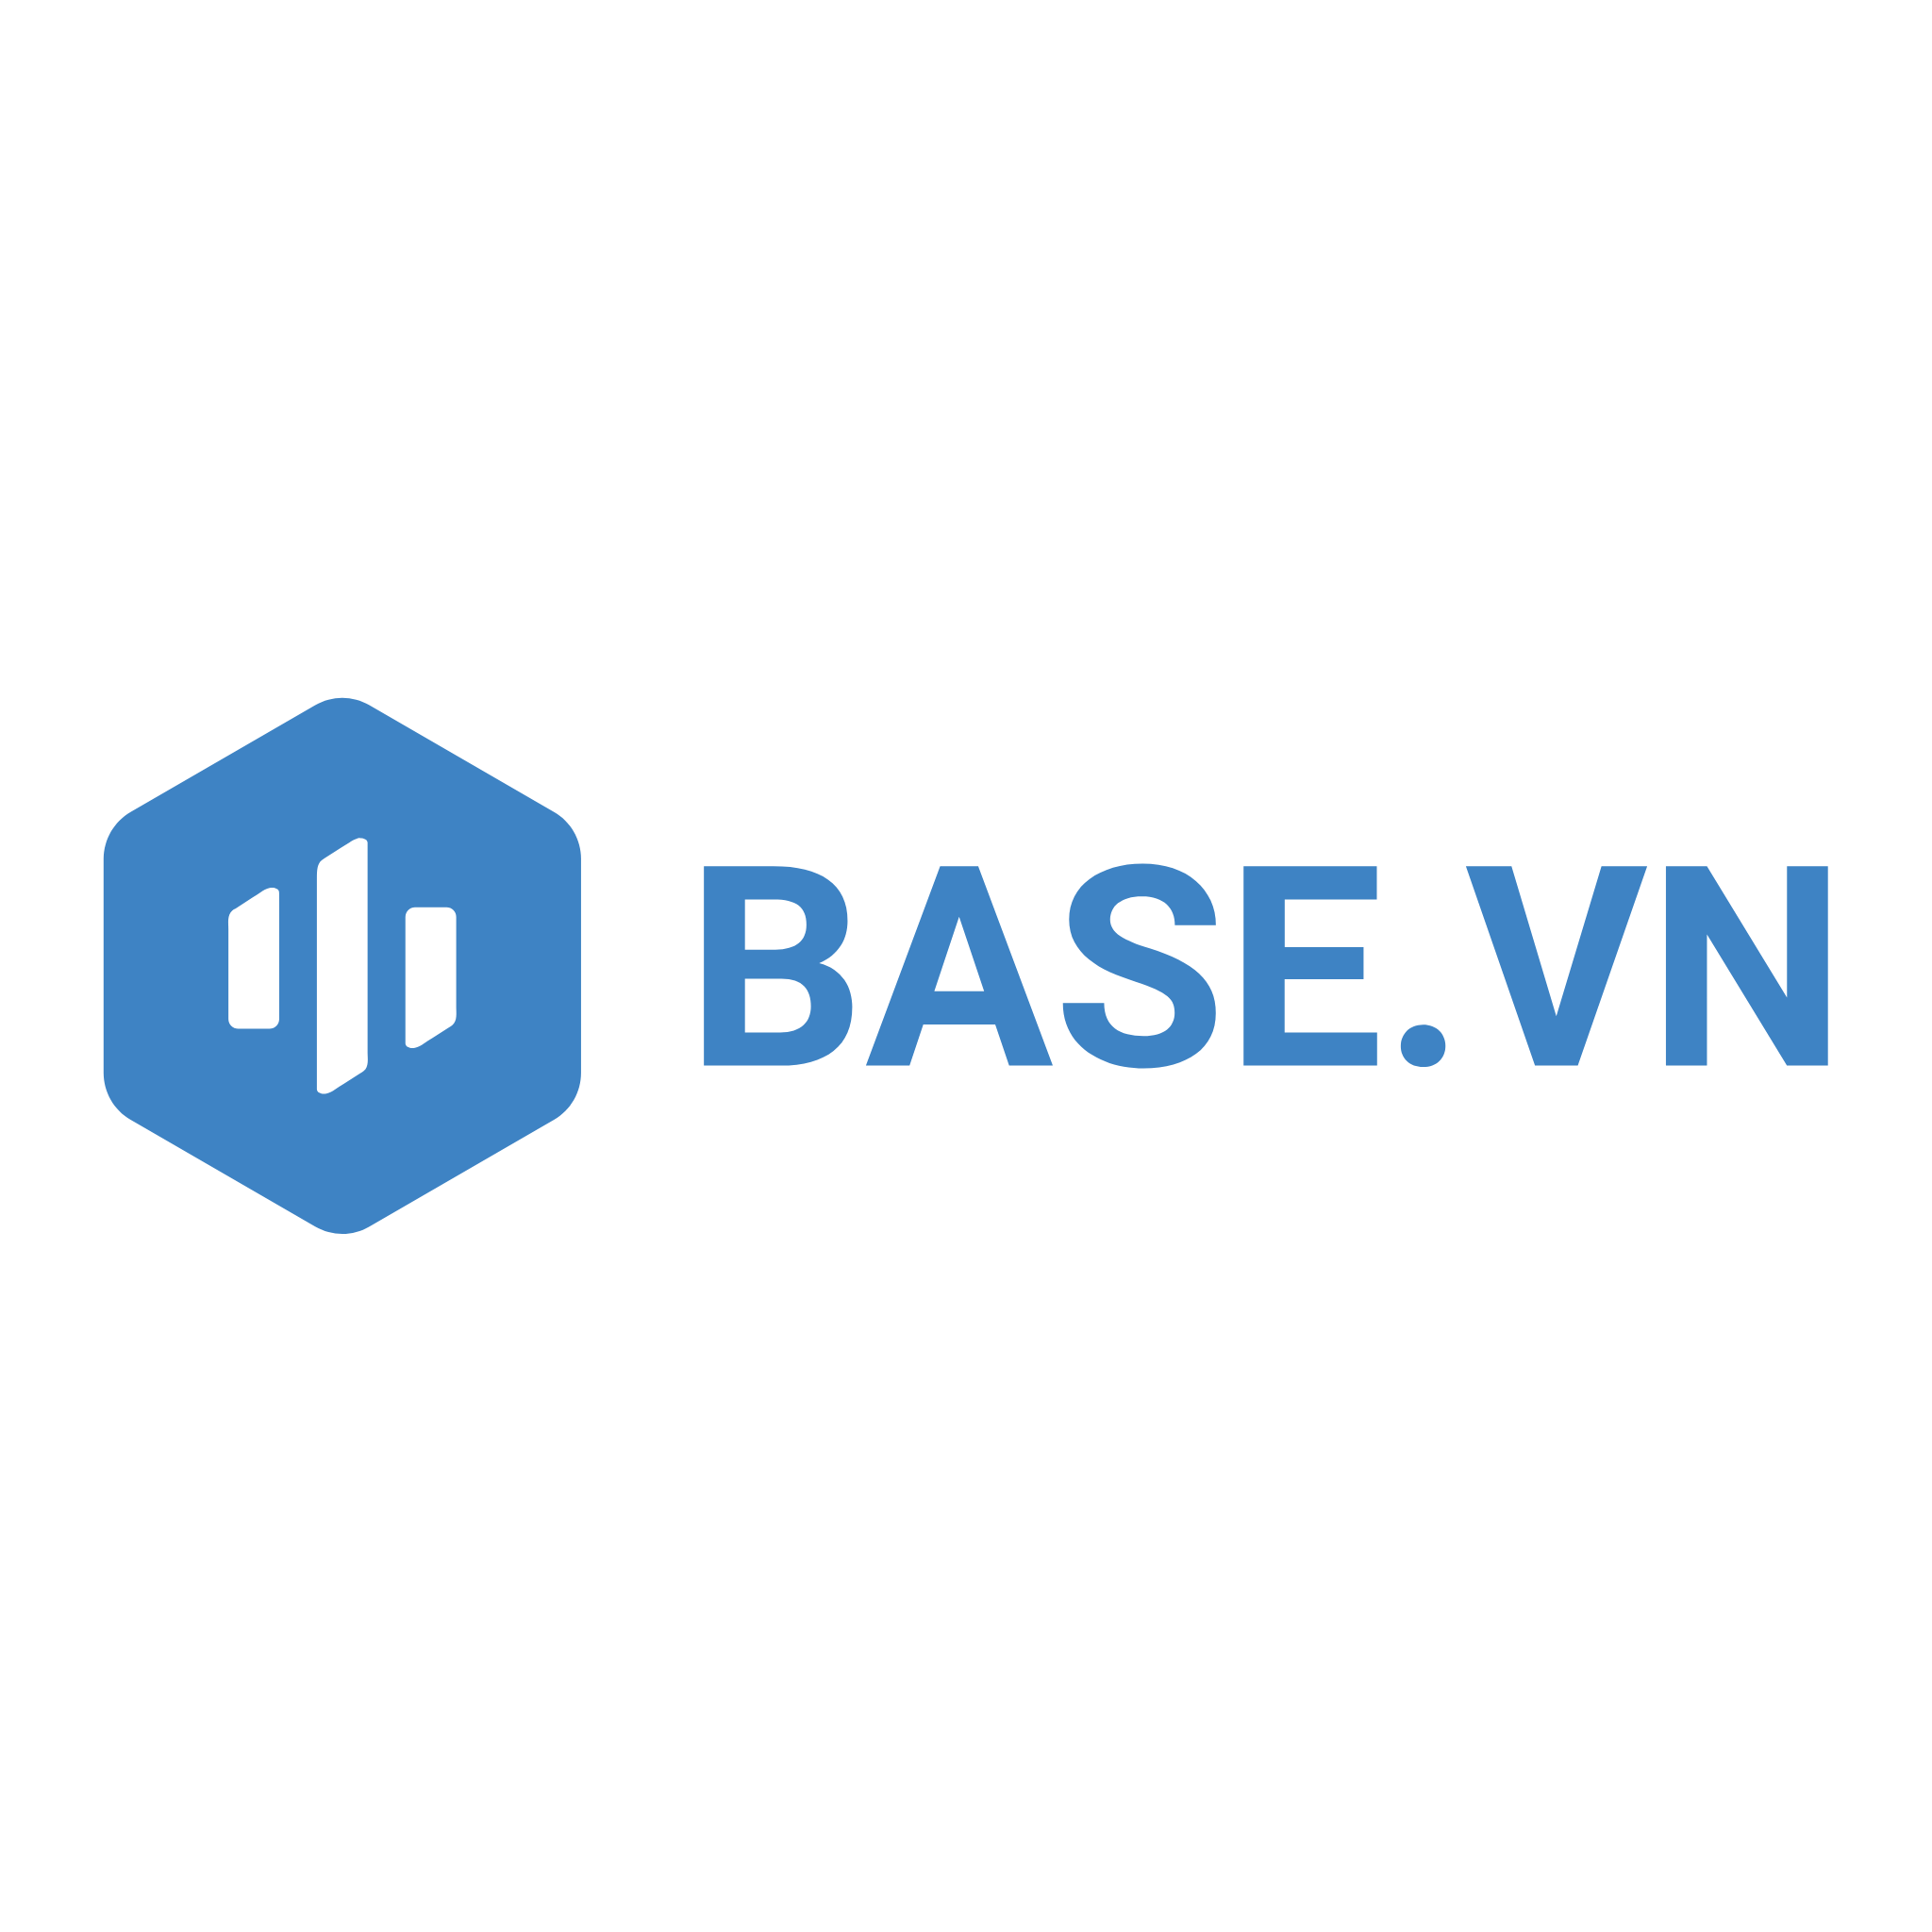 Base.vn Logo